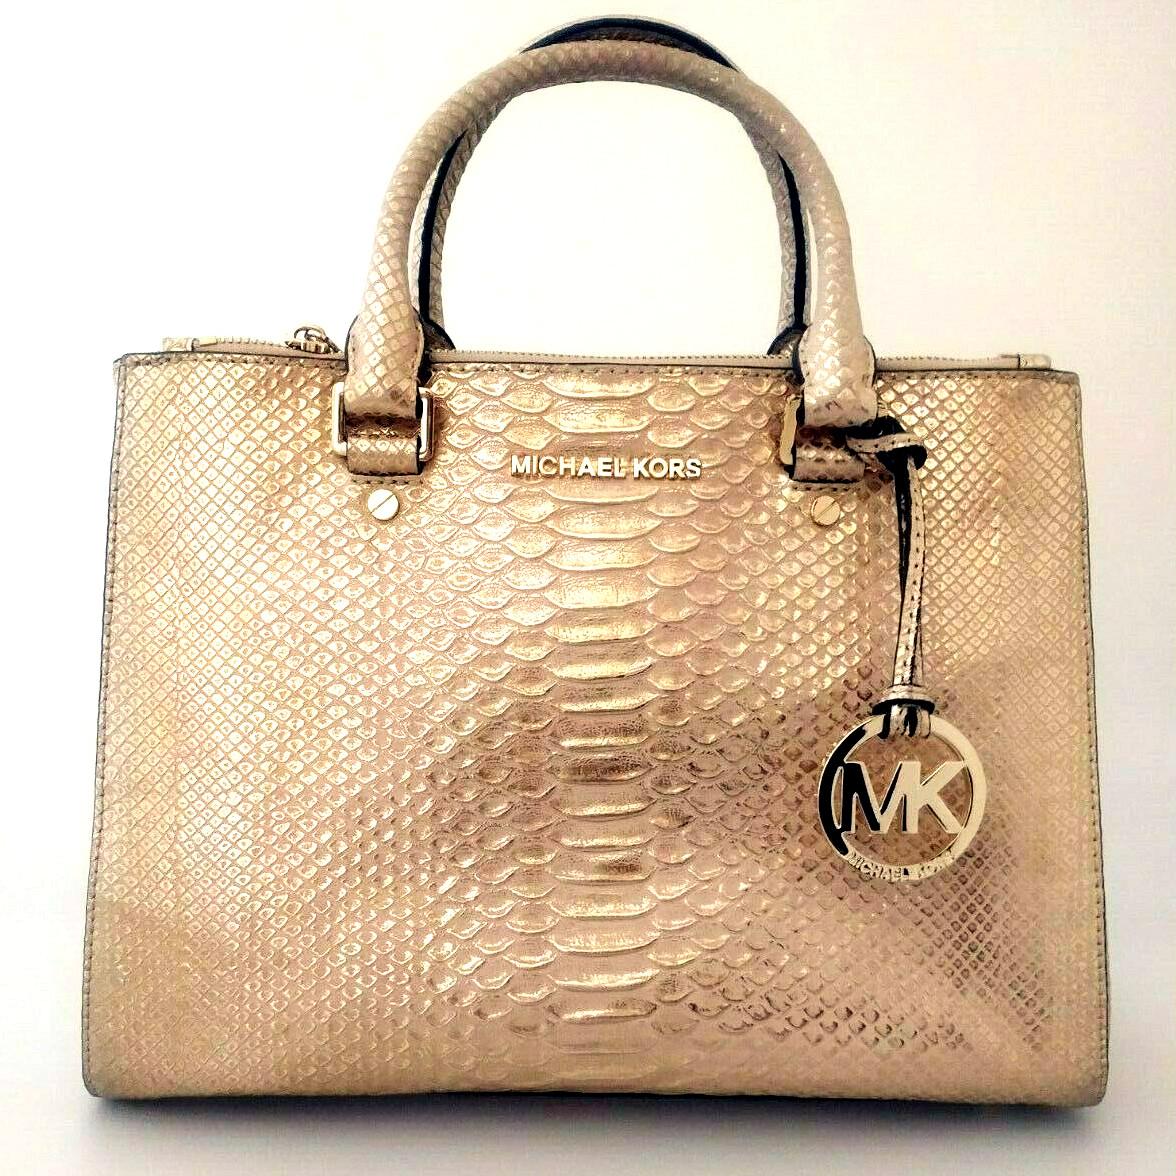 Gold Miachel Kors purse - Women's handbags